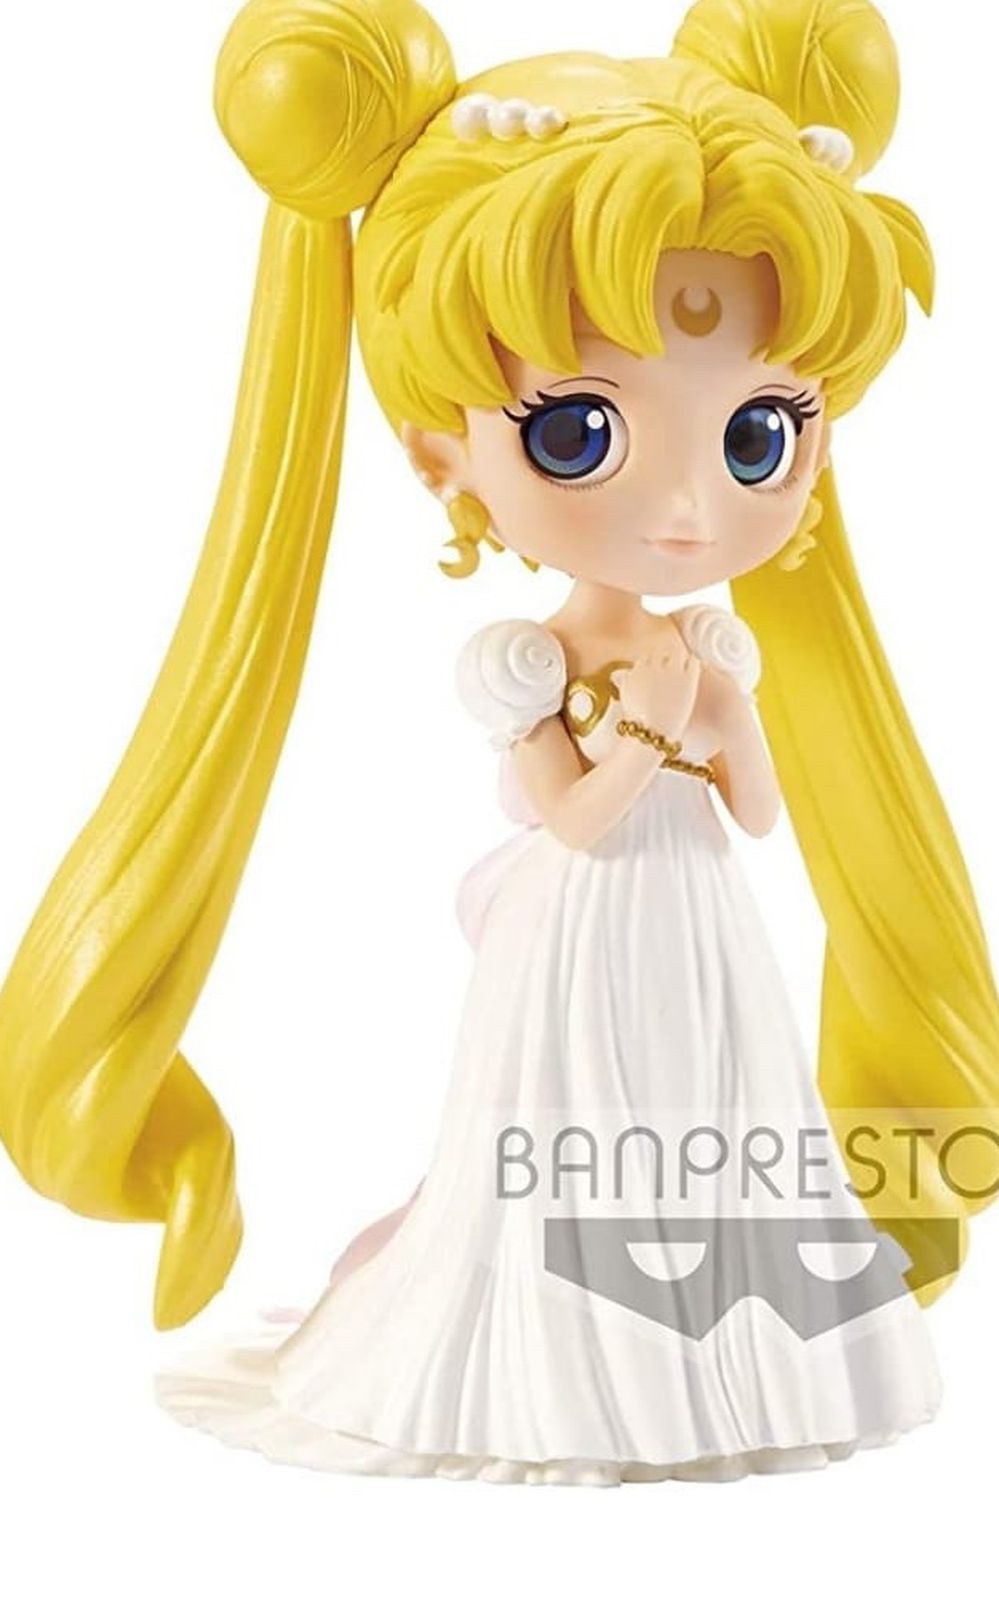 Sailor Moon Figure 5 1/2” Tall